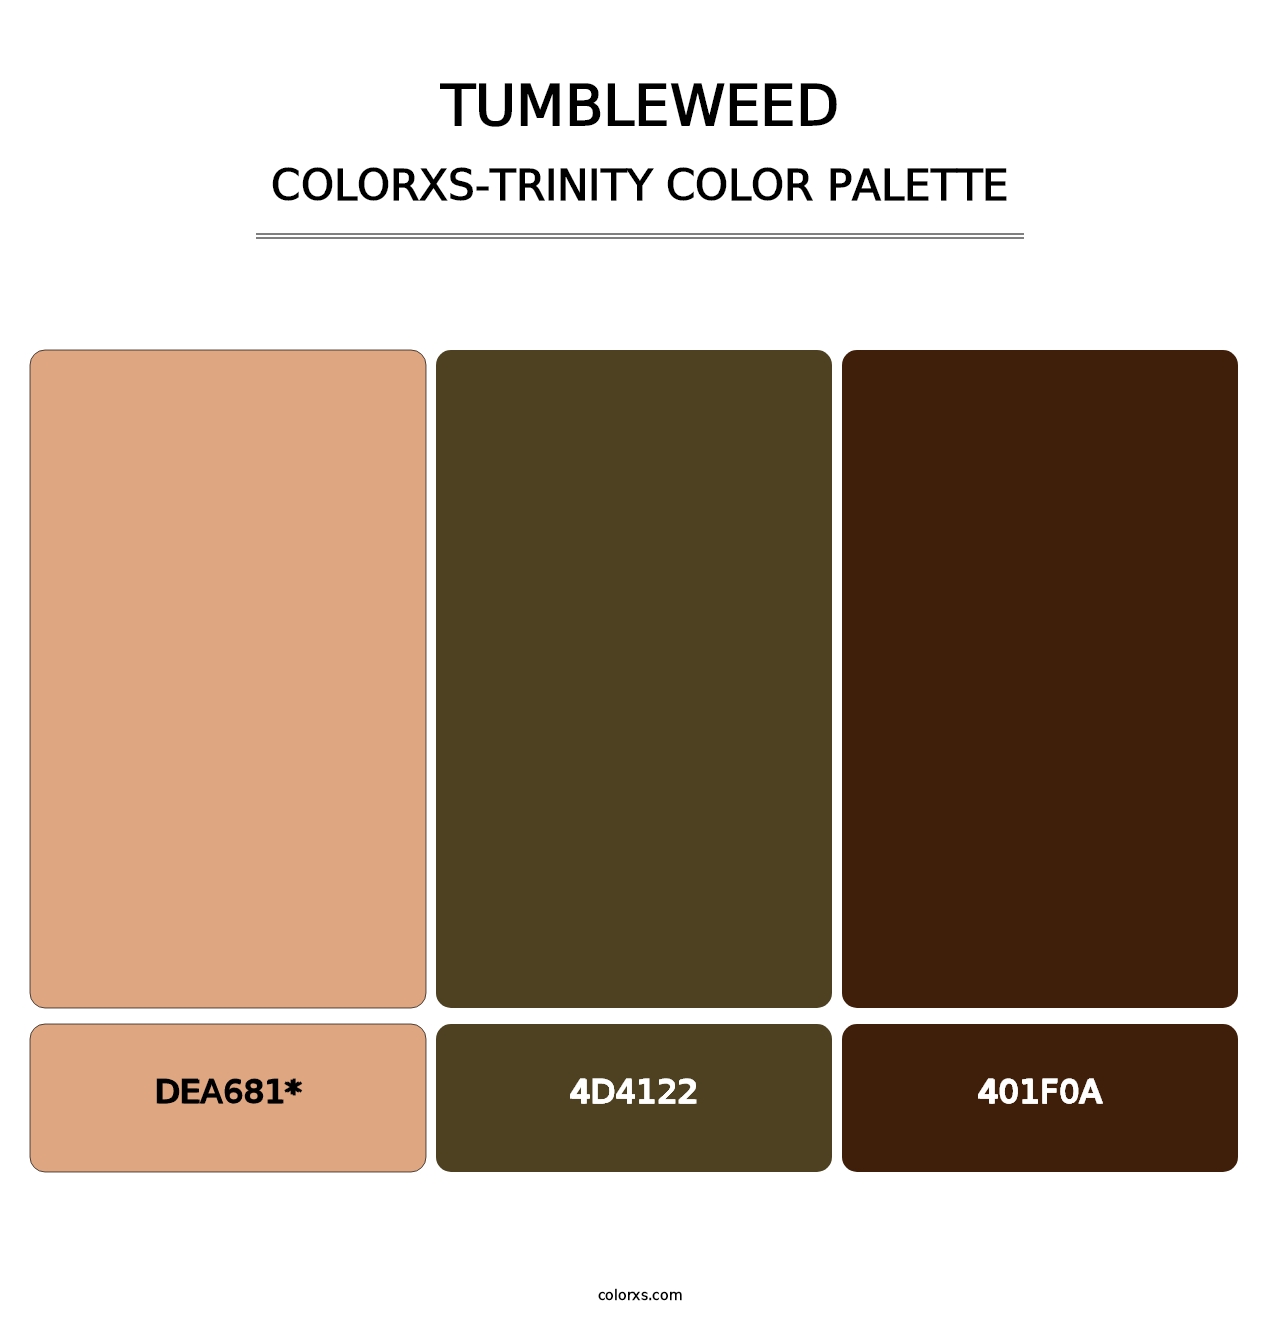 Tumbleweed - Colorxs Trinity Palette